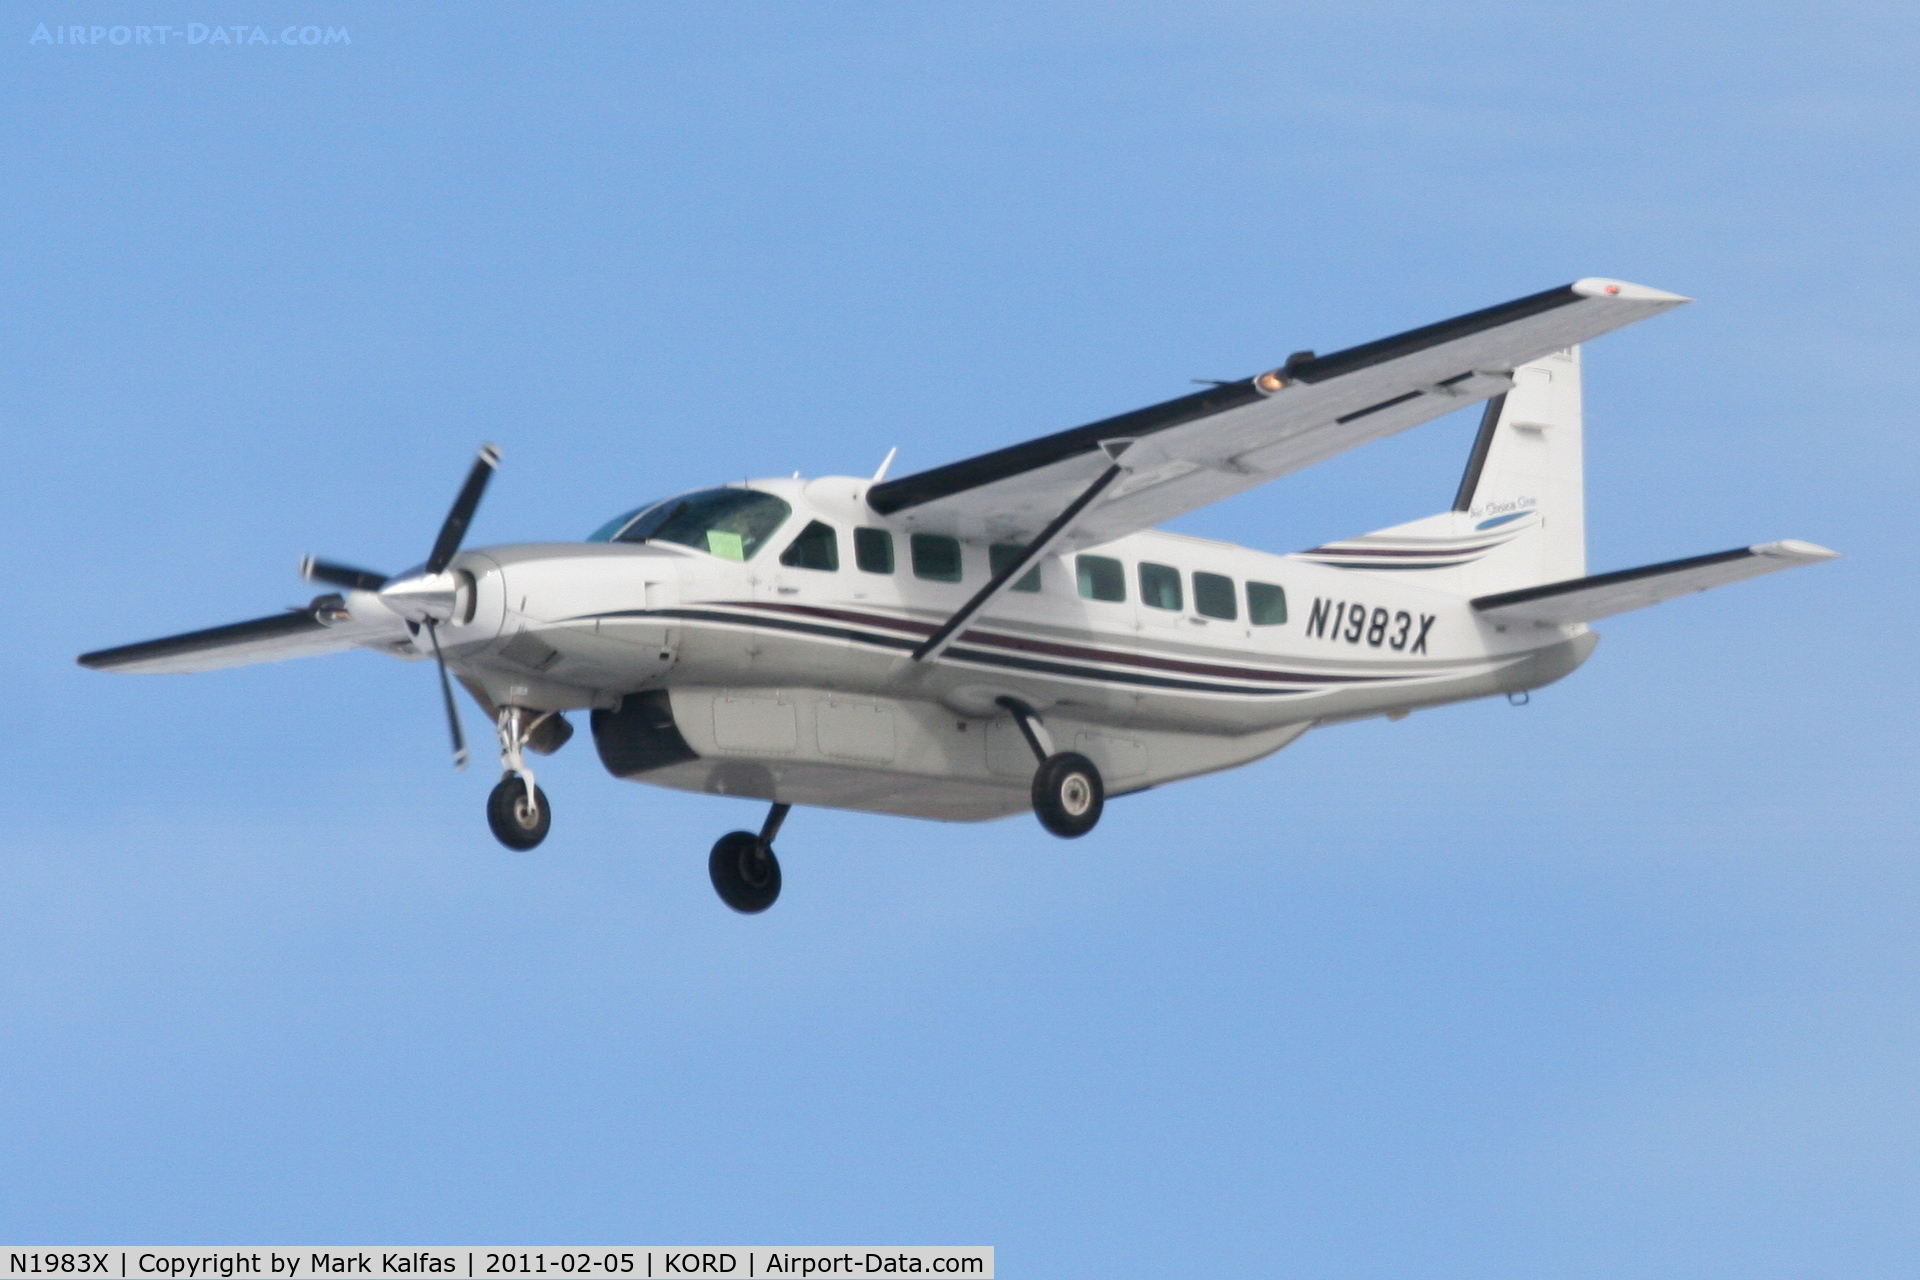 N1983X, 2003 Cessna 208B Grand Caravan C/N 208B1013, Multi-Aero Air Choice One Cessna 208B, WBR250 on final RWY 28 KORD from KBRL.